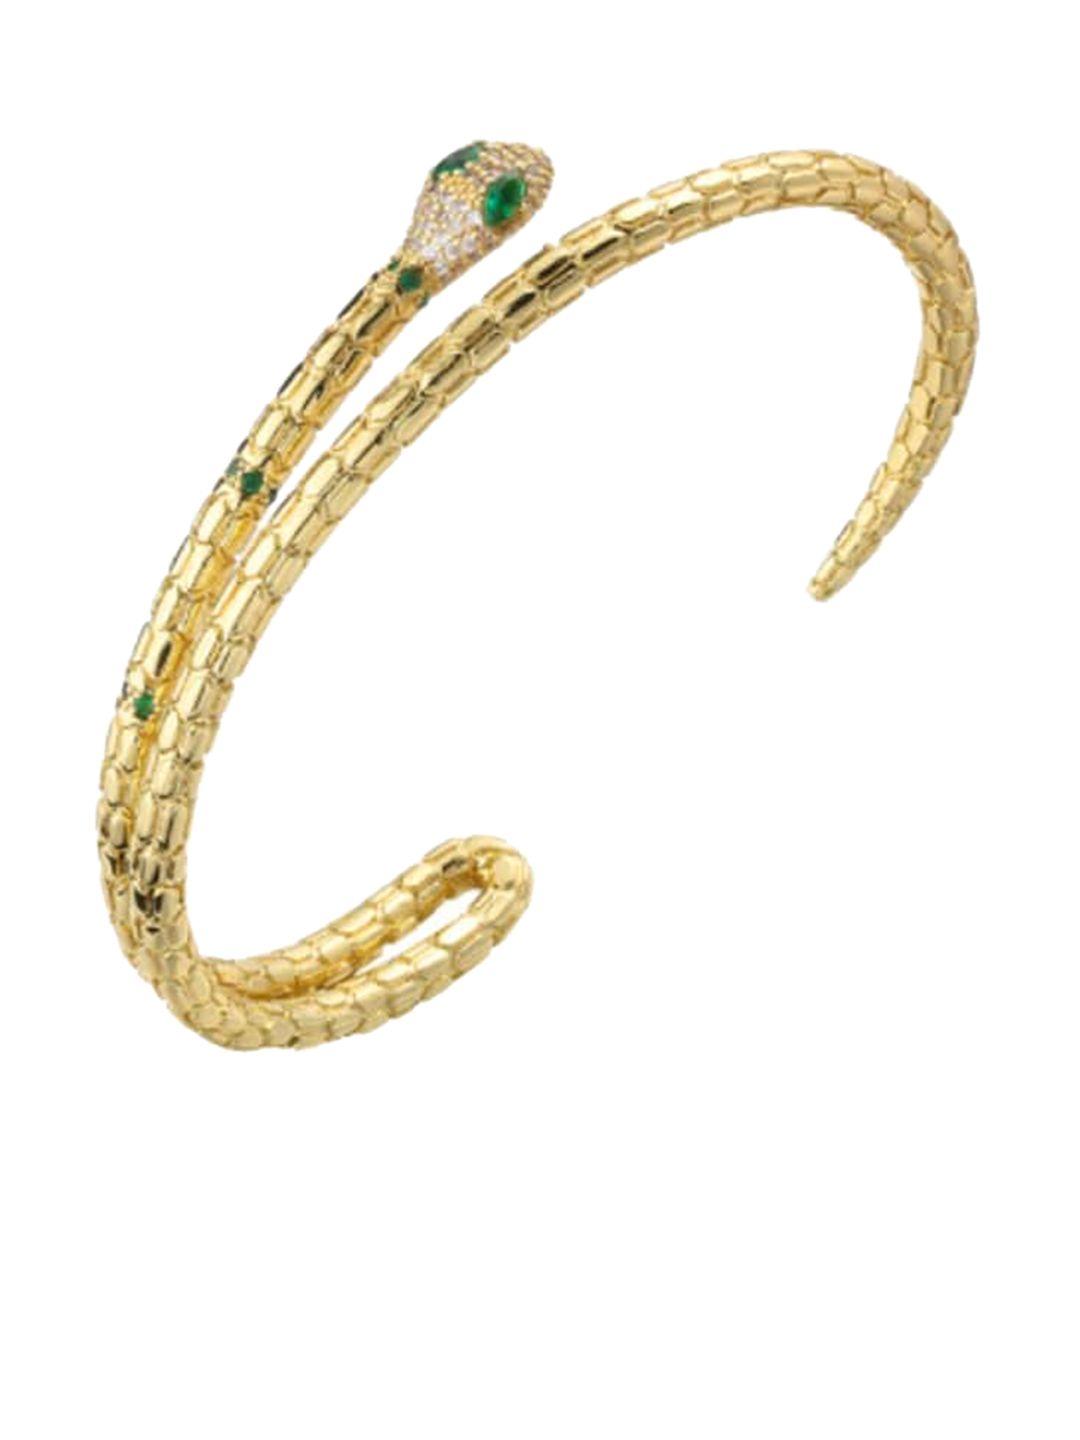 white lies women gold-toned & green cuff bracelet